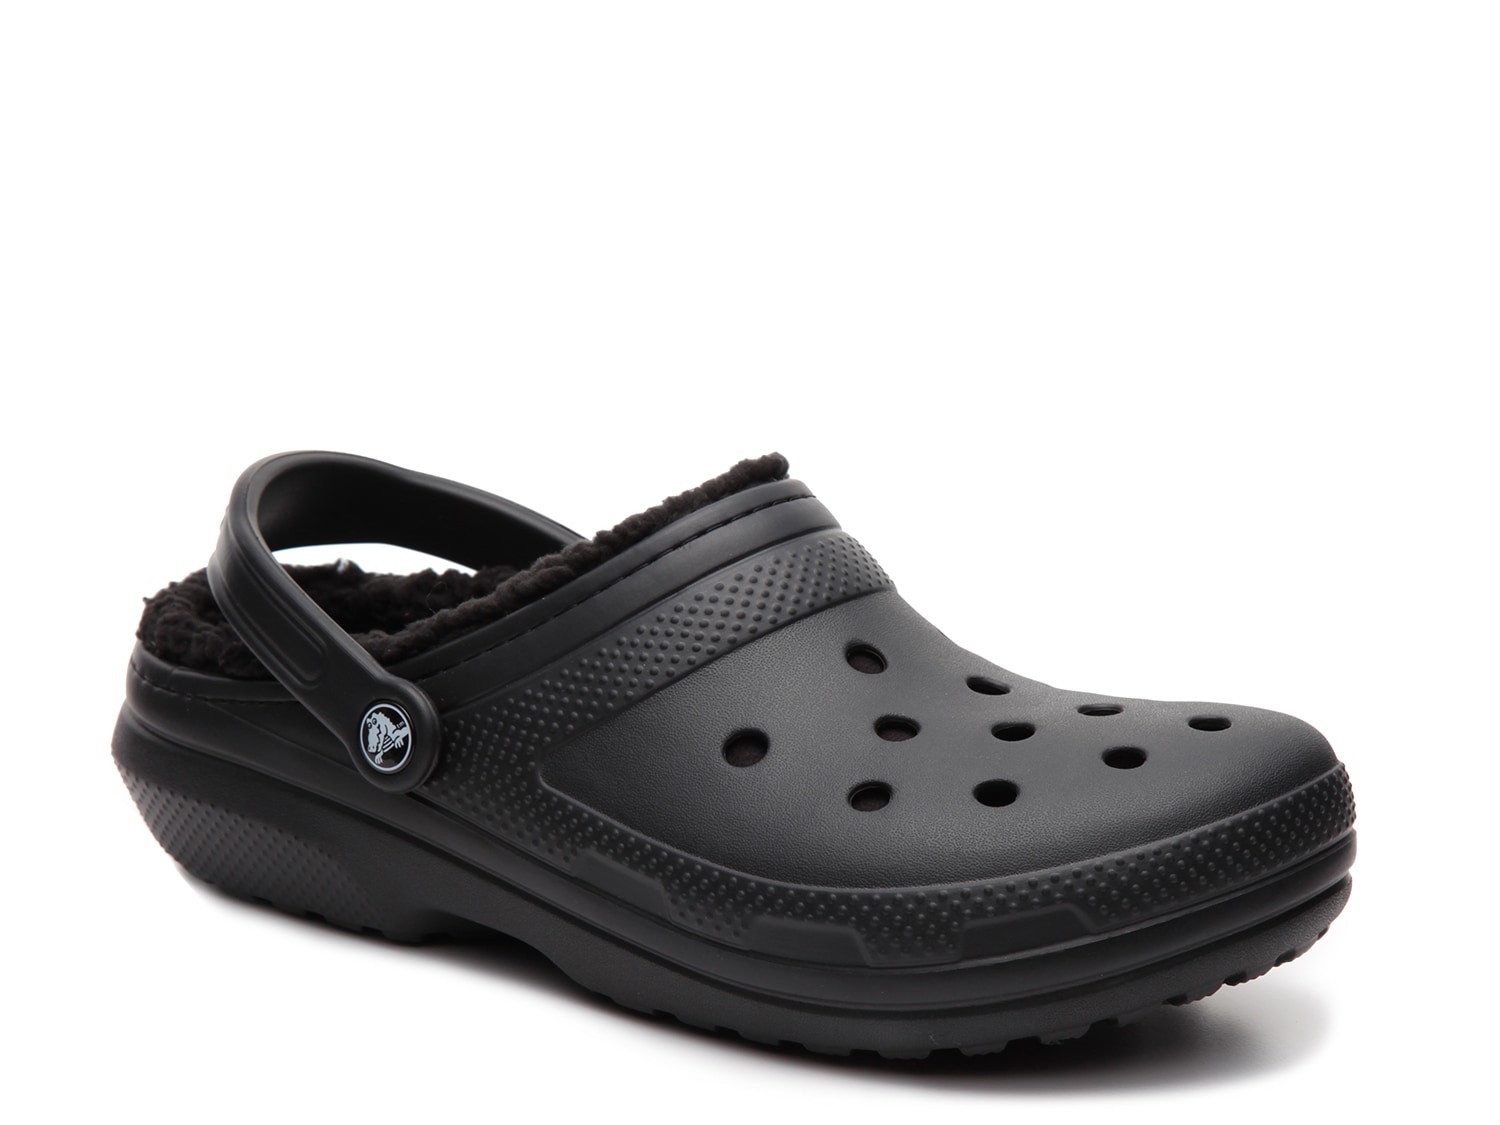 crocs type shoes cheap